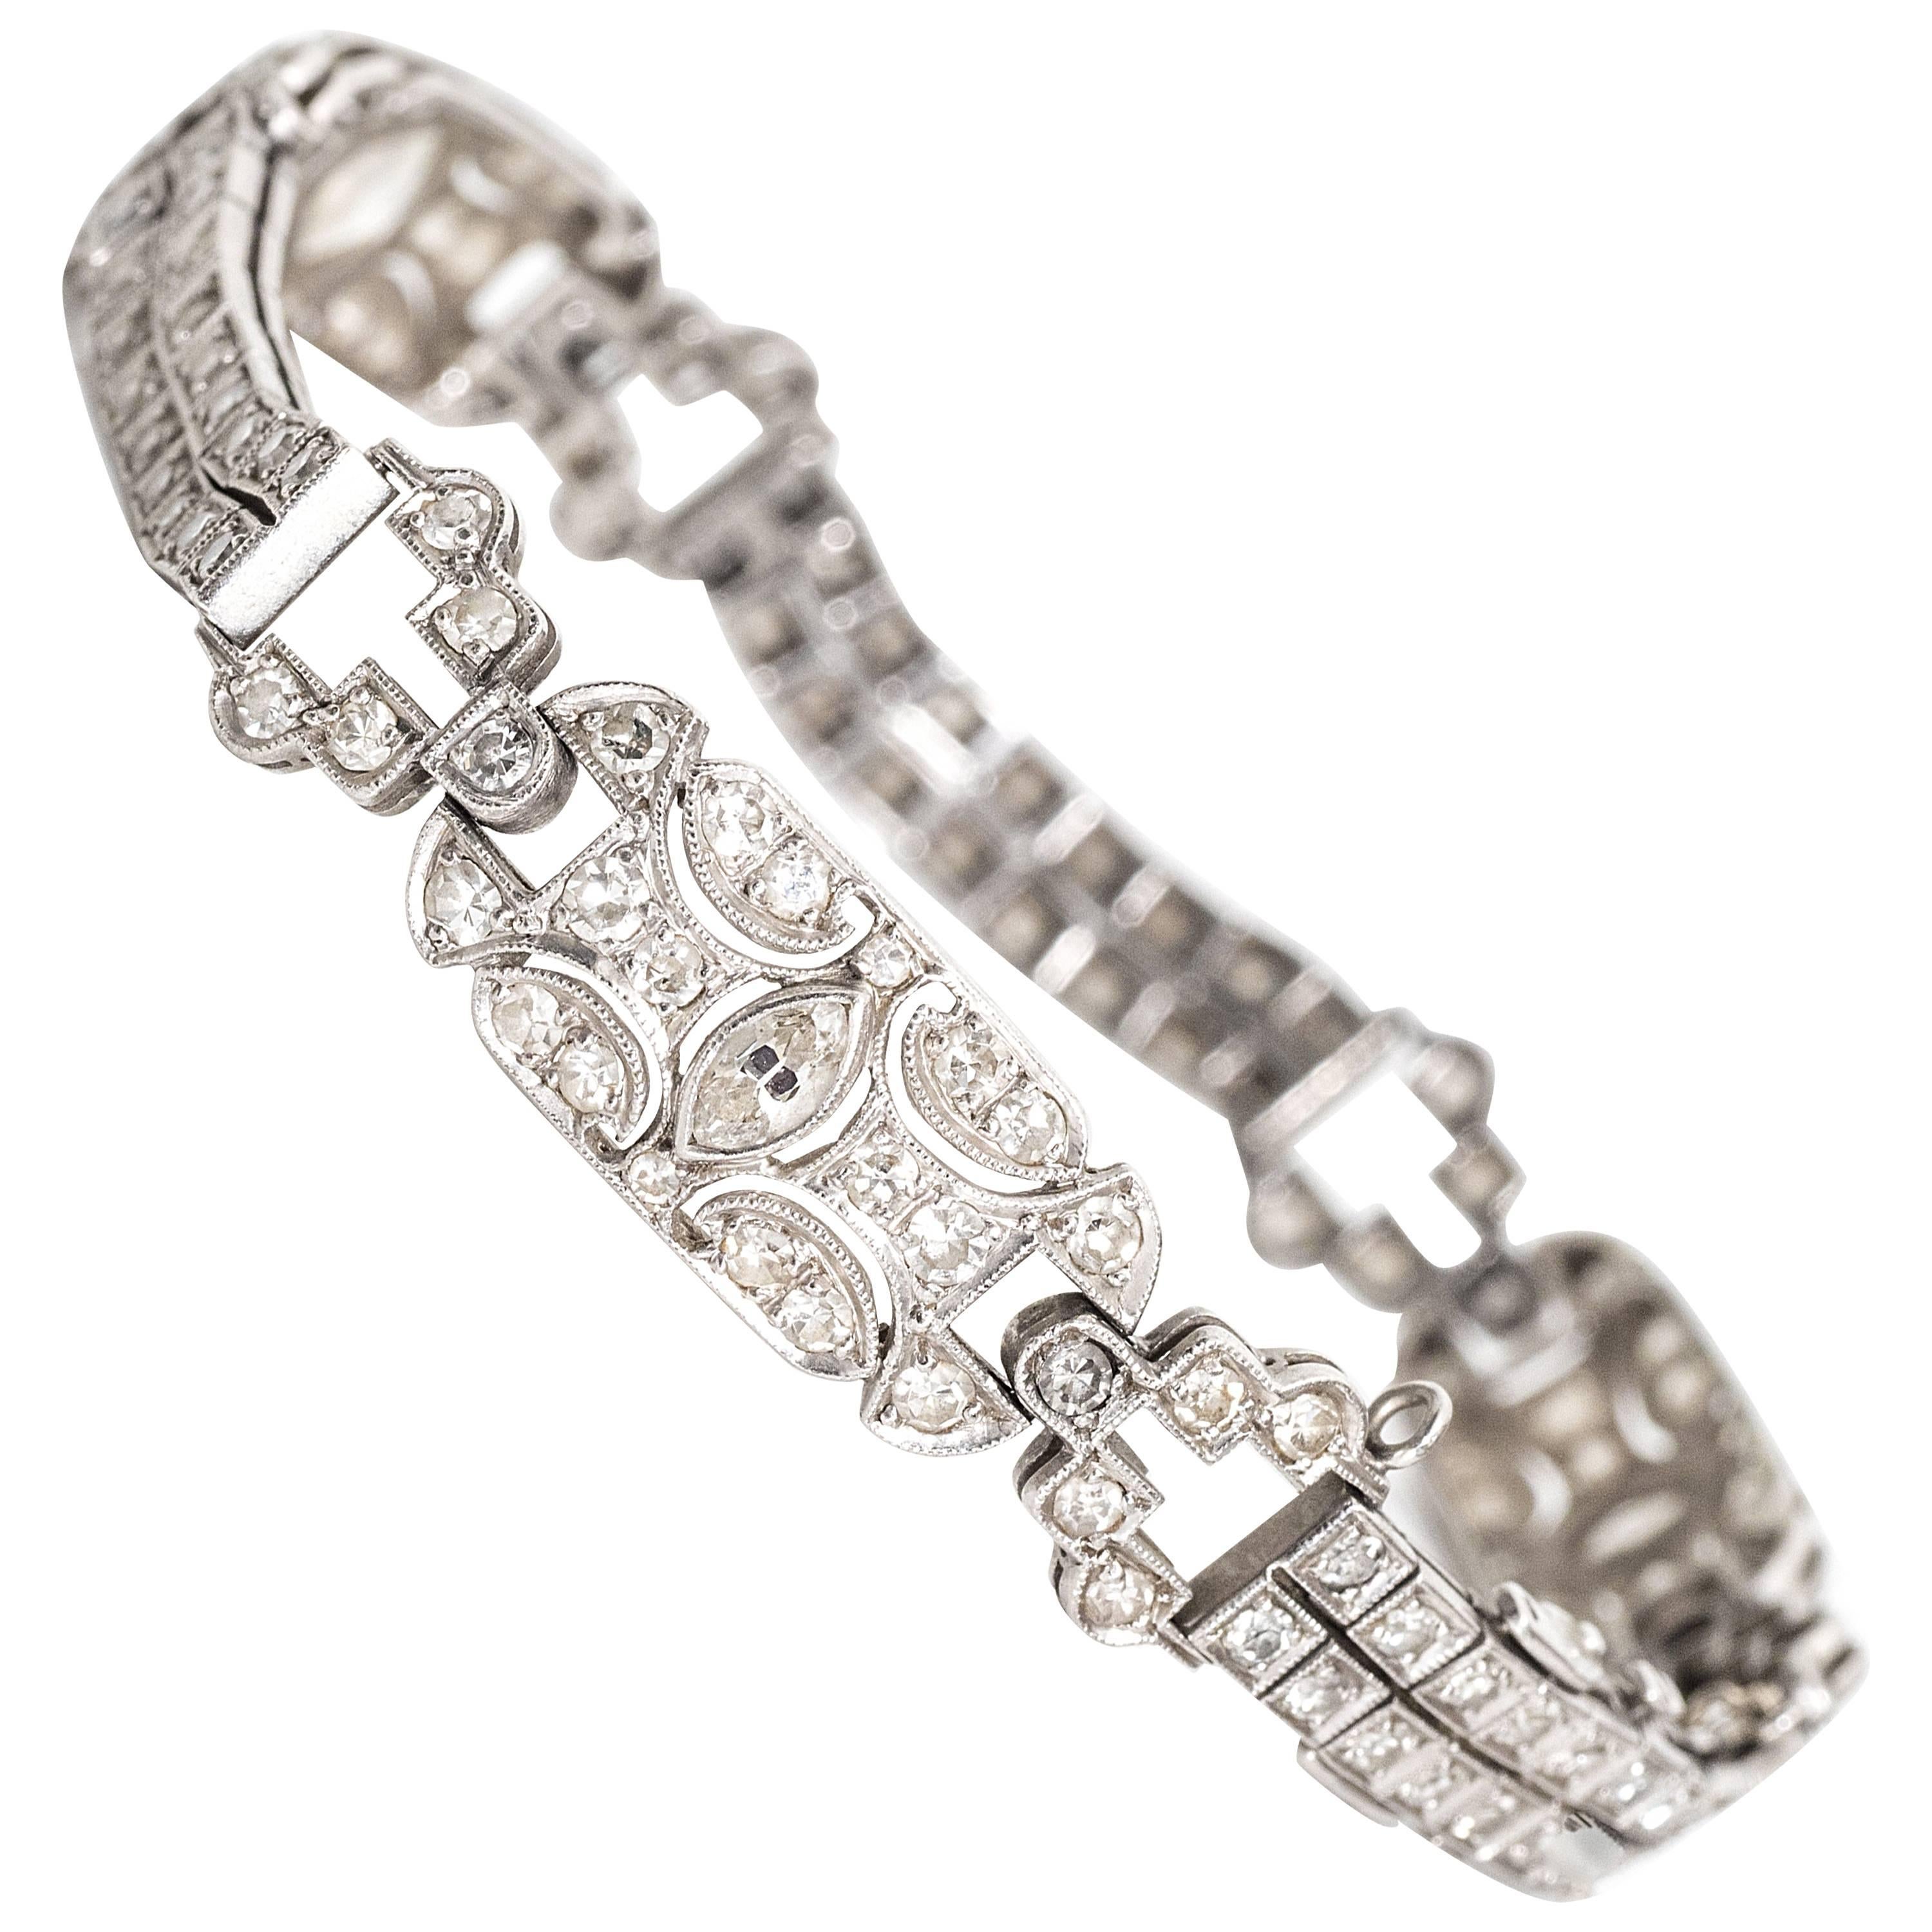 1905 Art Nouveau 3.5 Carat Diamond Platinum Bracelet